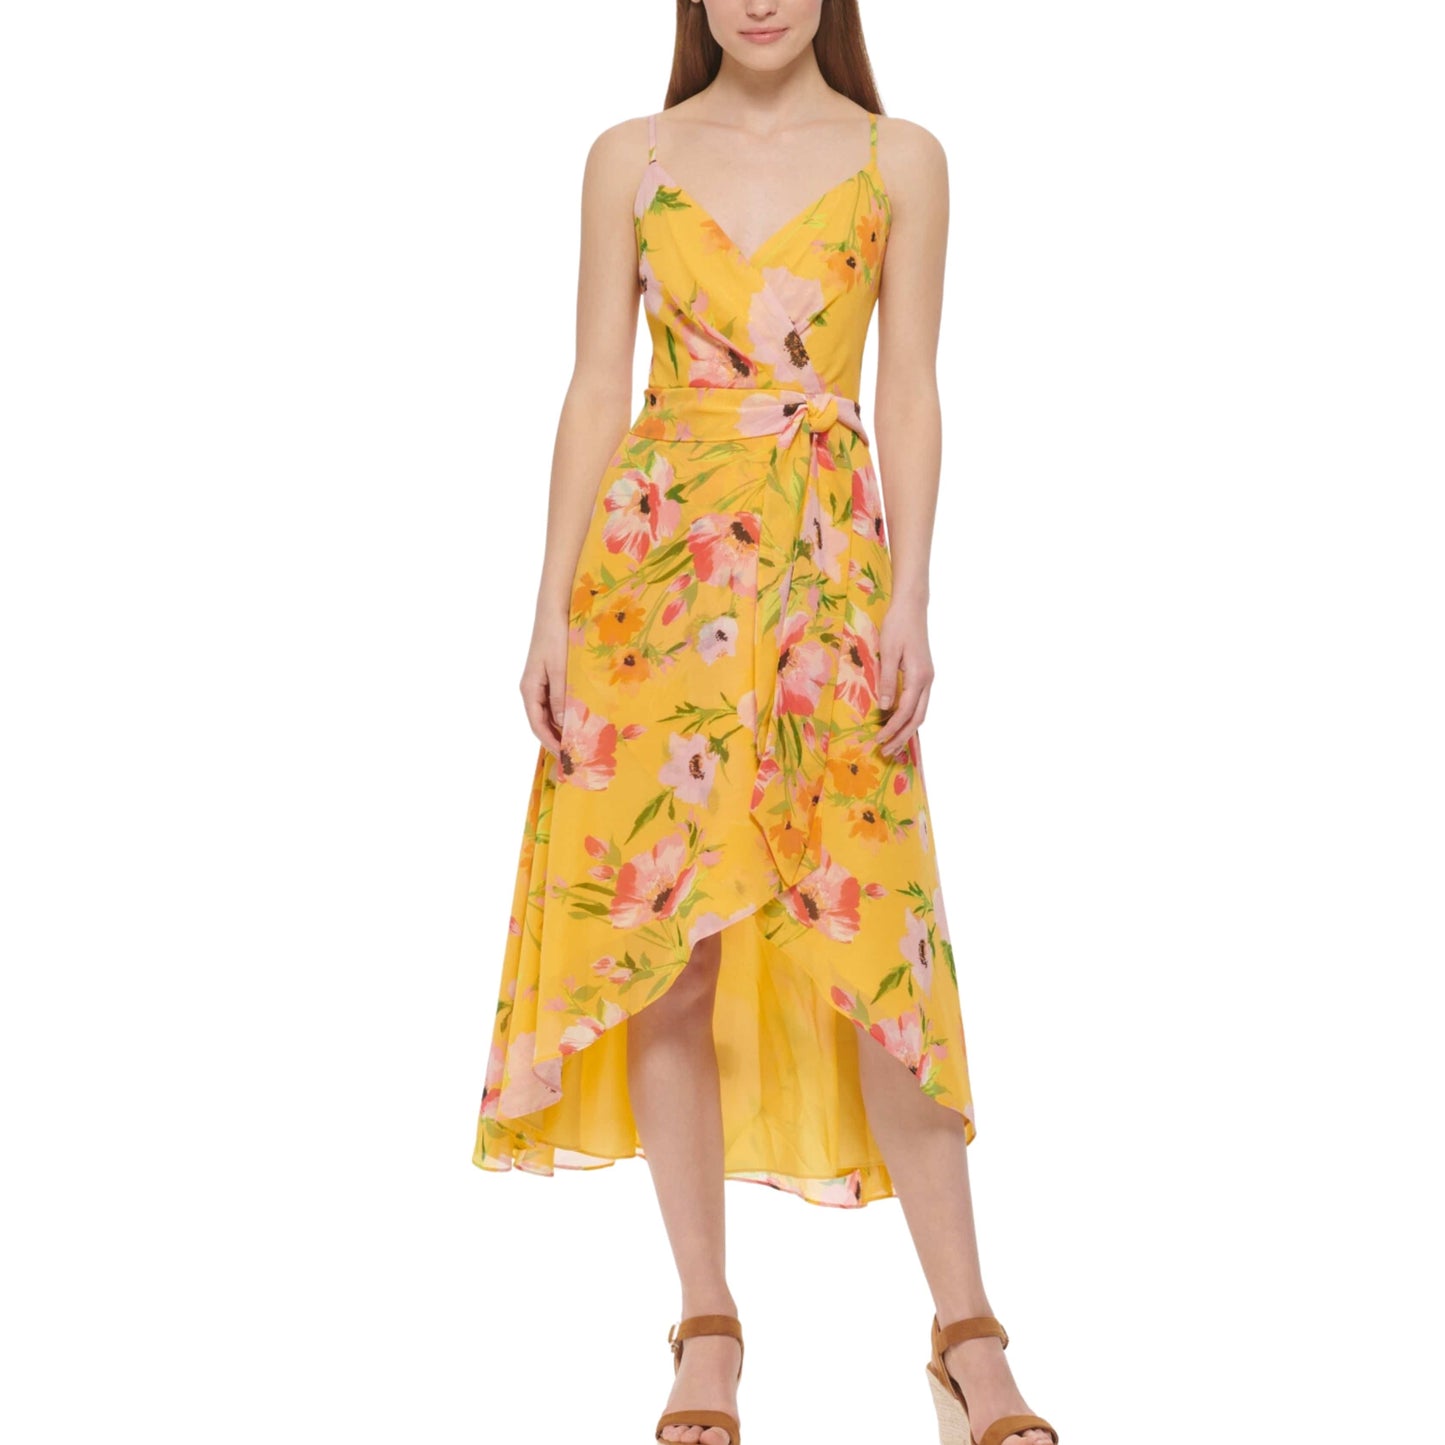 VINCE CAMUTO Womens Dress Petite S / Multi-Color VINCE CAMUTO - Floral V-Neck Fit & Flare Dress